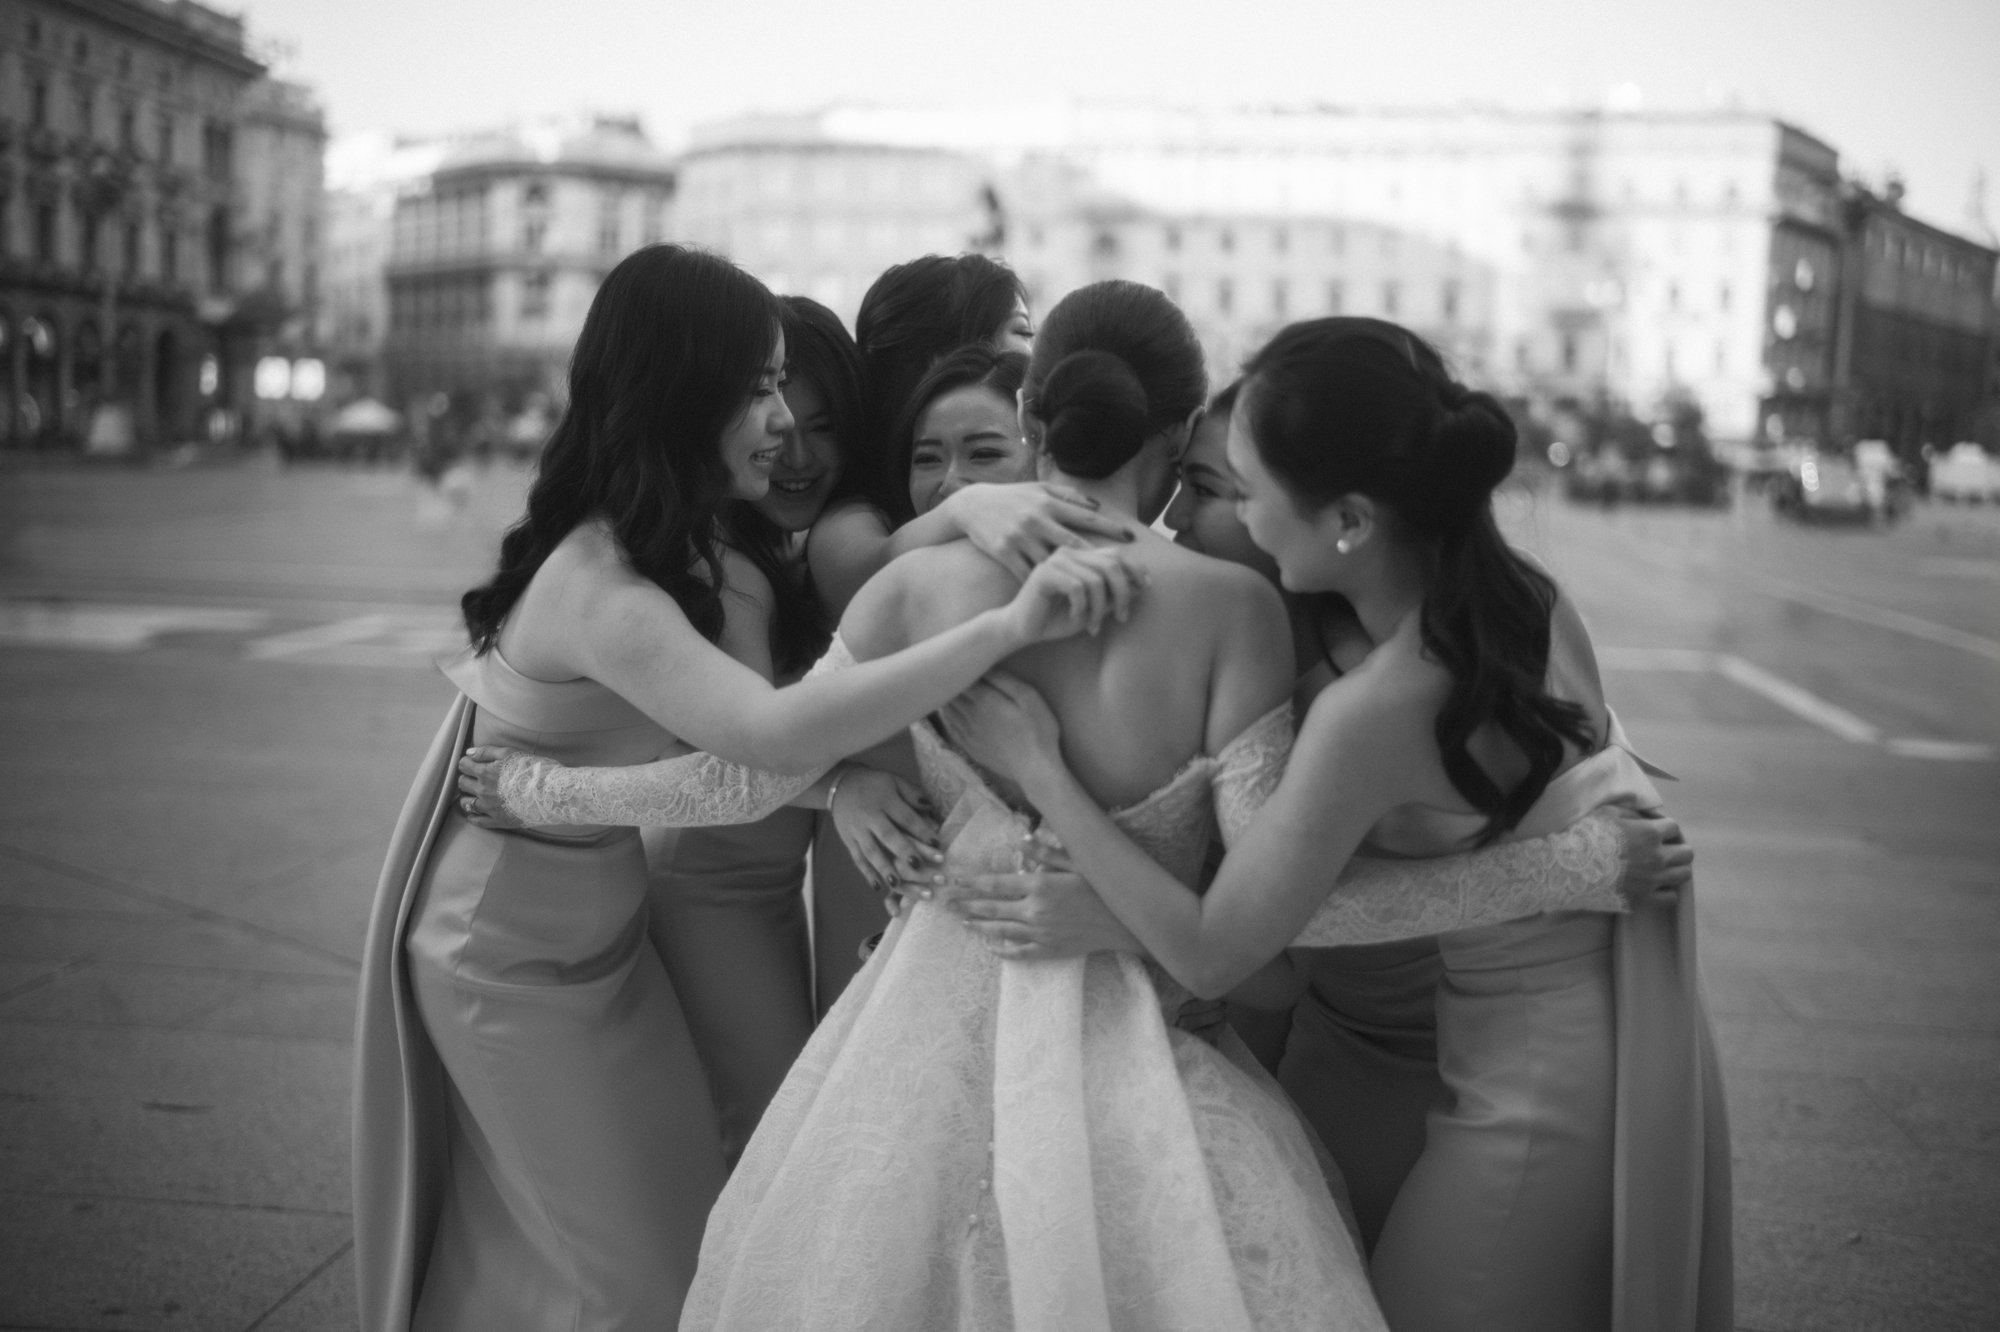 Prawira-Evelyn-Dolomites-Italy-Santre wedding-Yefta Gunawan-Jeriko MUA-Carol Kuntjoro Photography-15.jpg